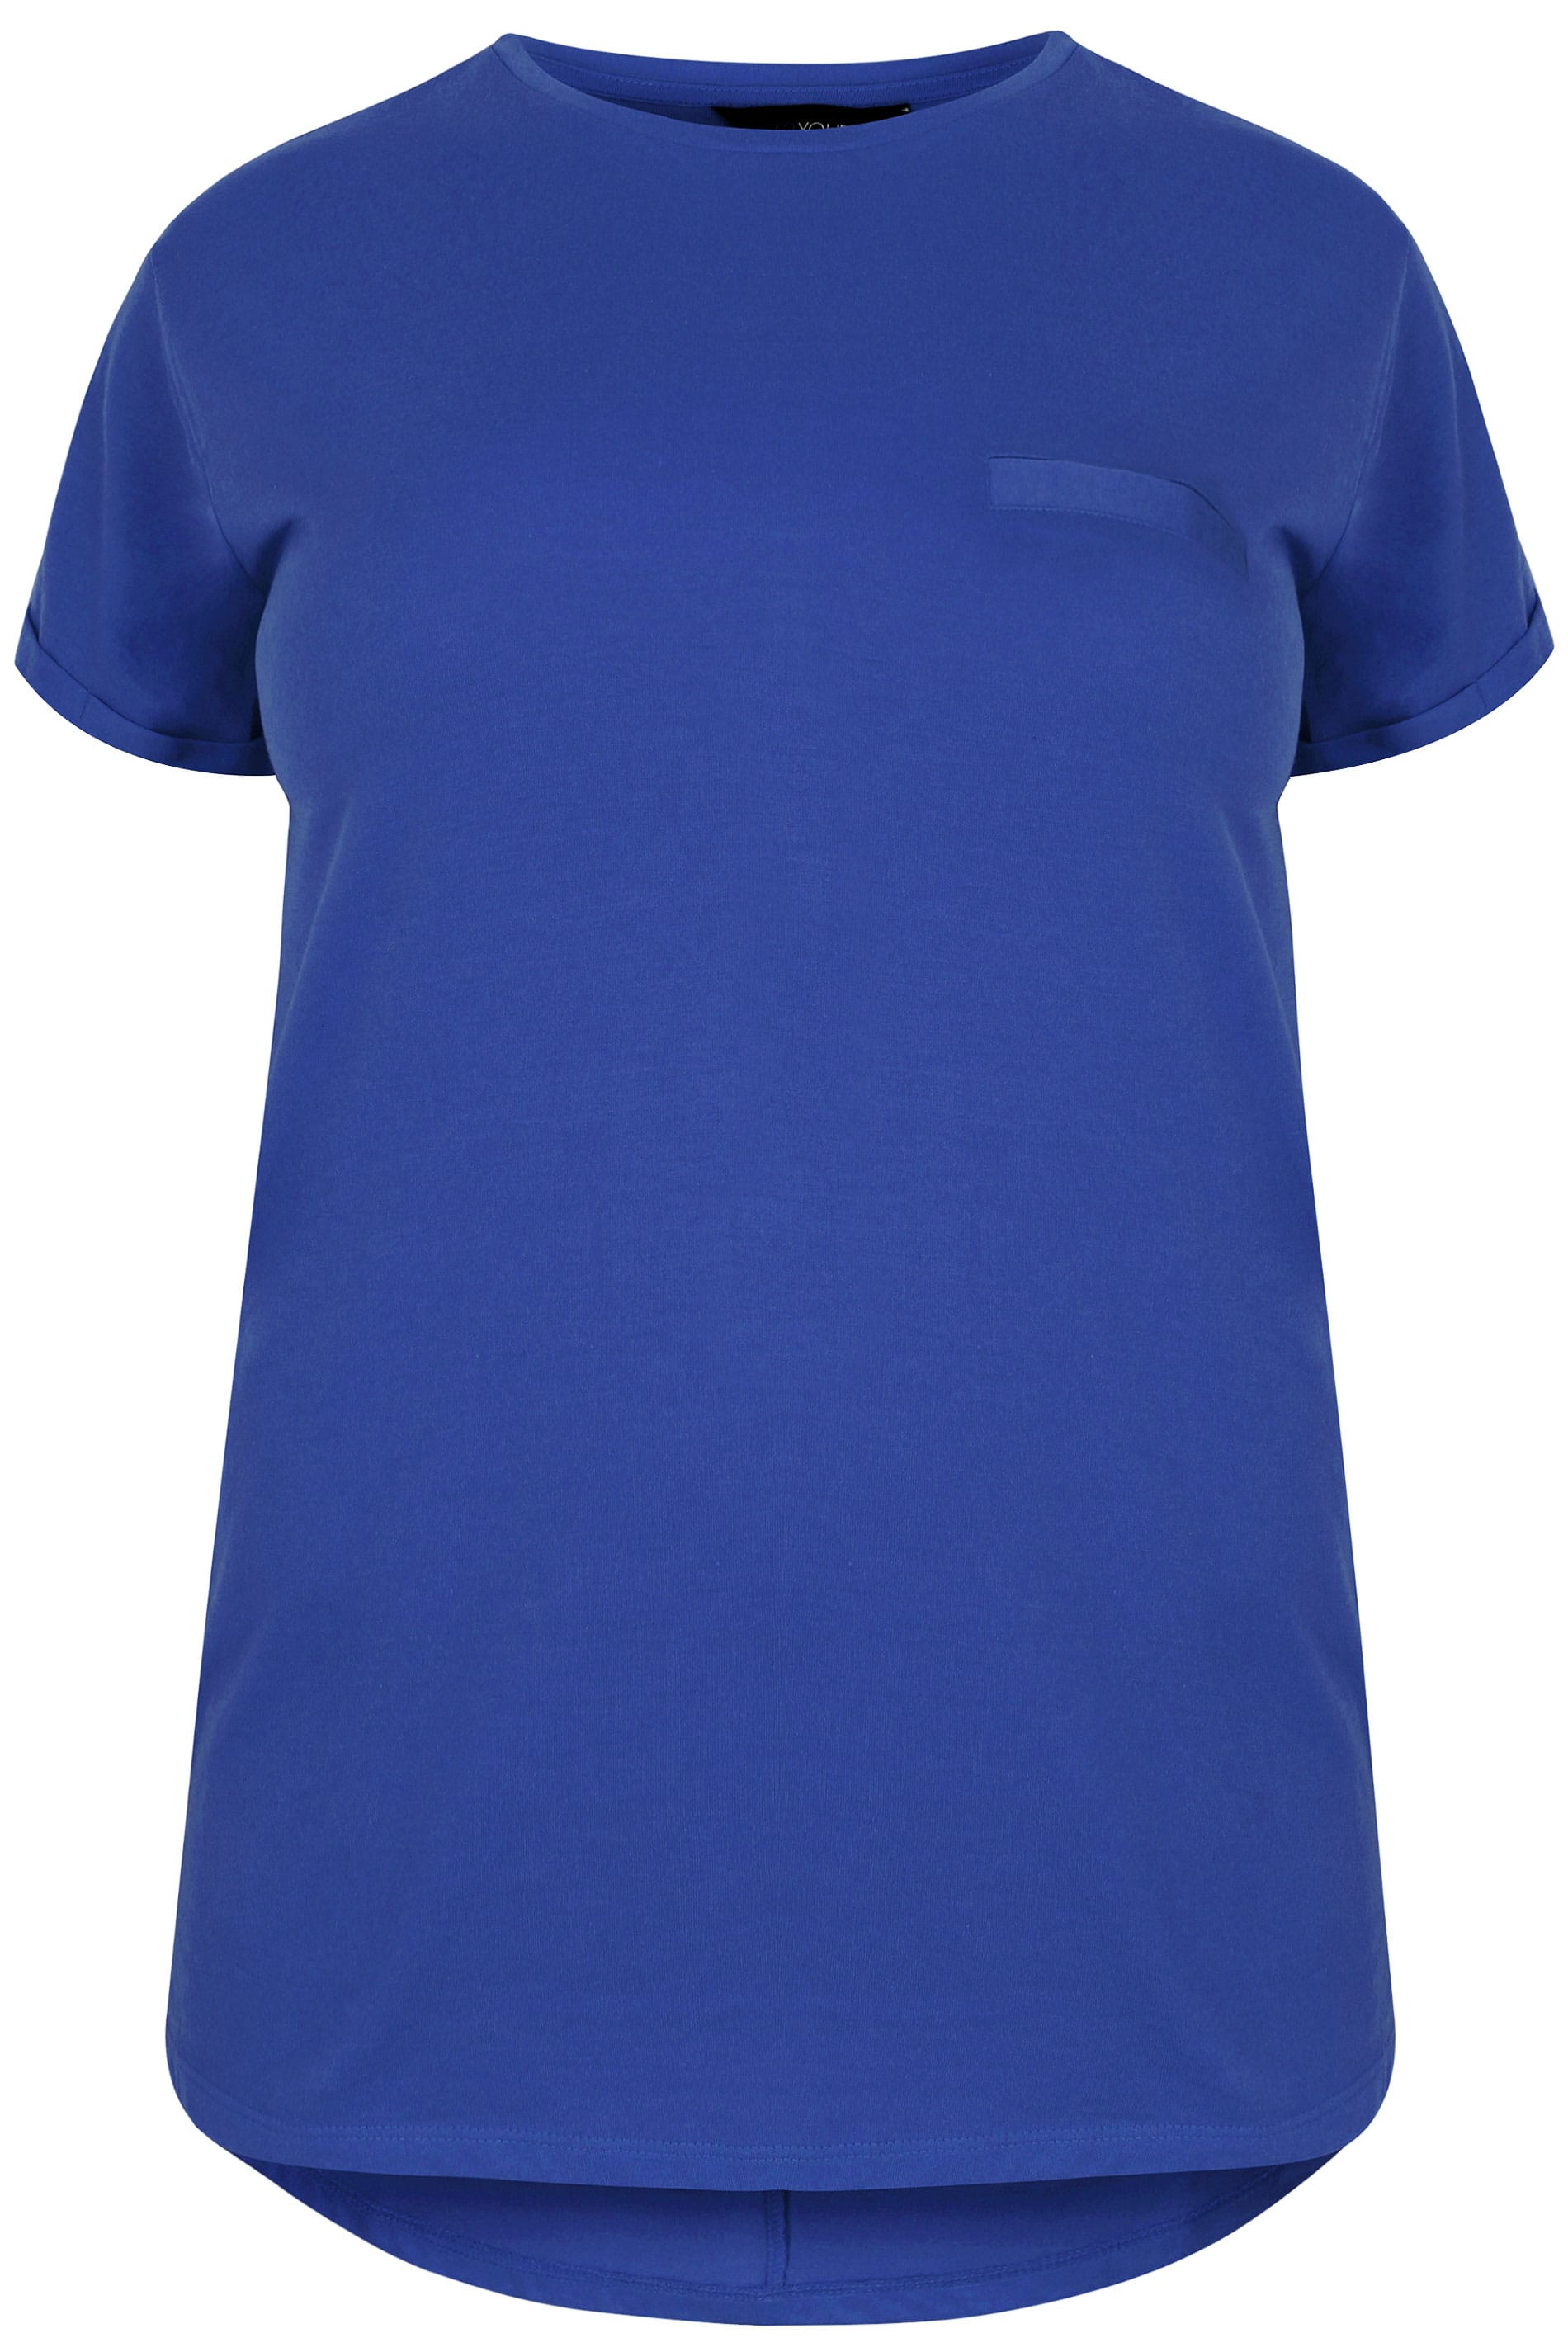 Download Cobalt Blue Mock Pocket T-Shirt | Plus Sizes 16 to 36 ...